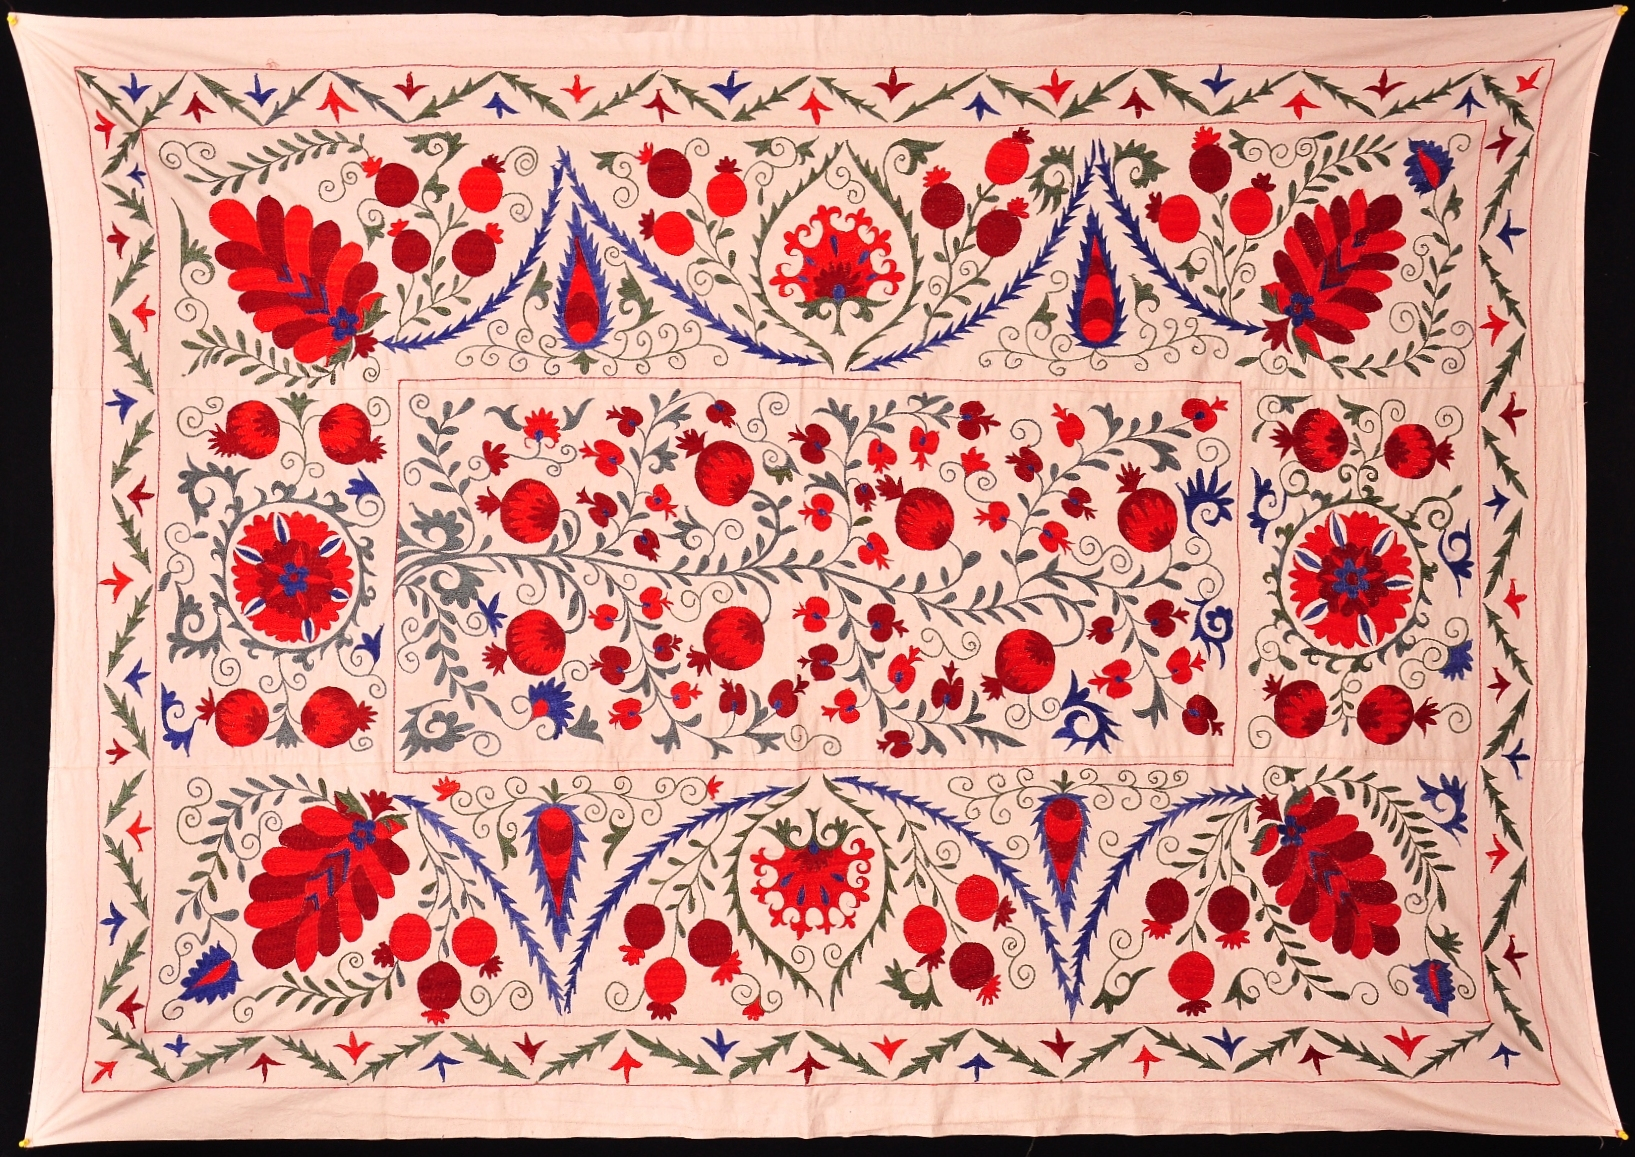 Turkish Embroidery Patterns Ottoman Silk Handmade Embroidery